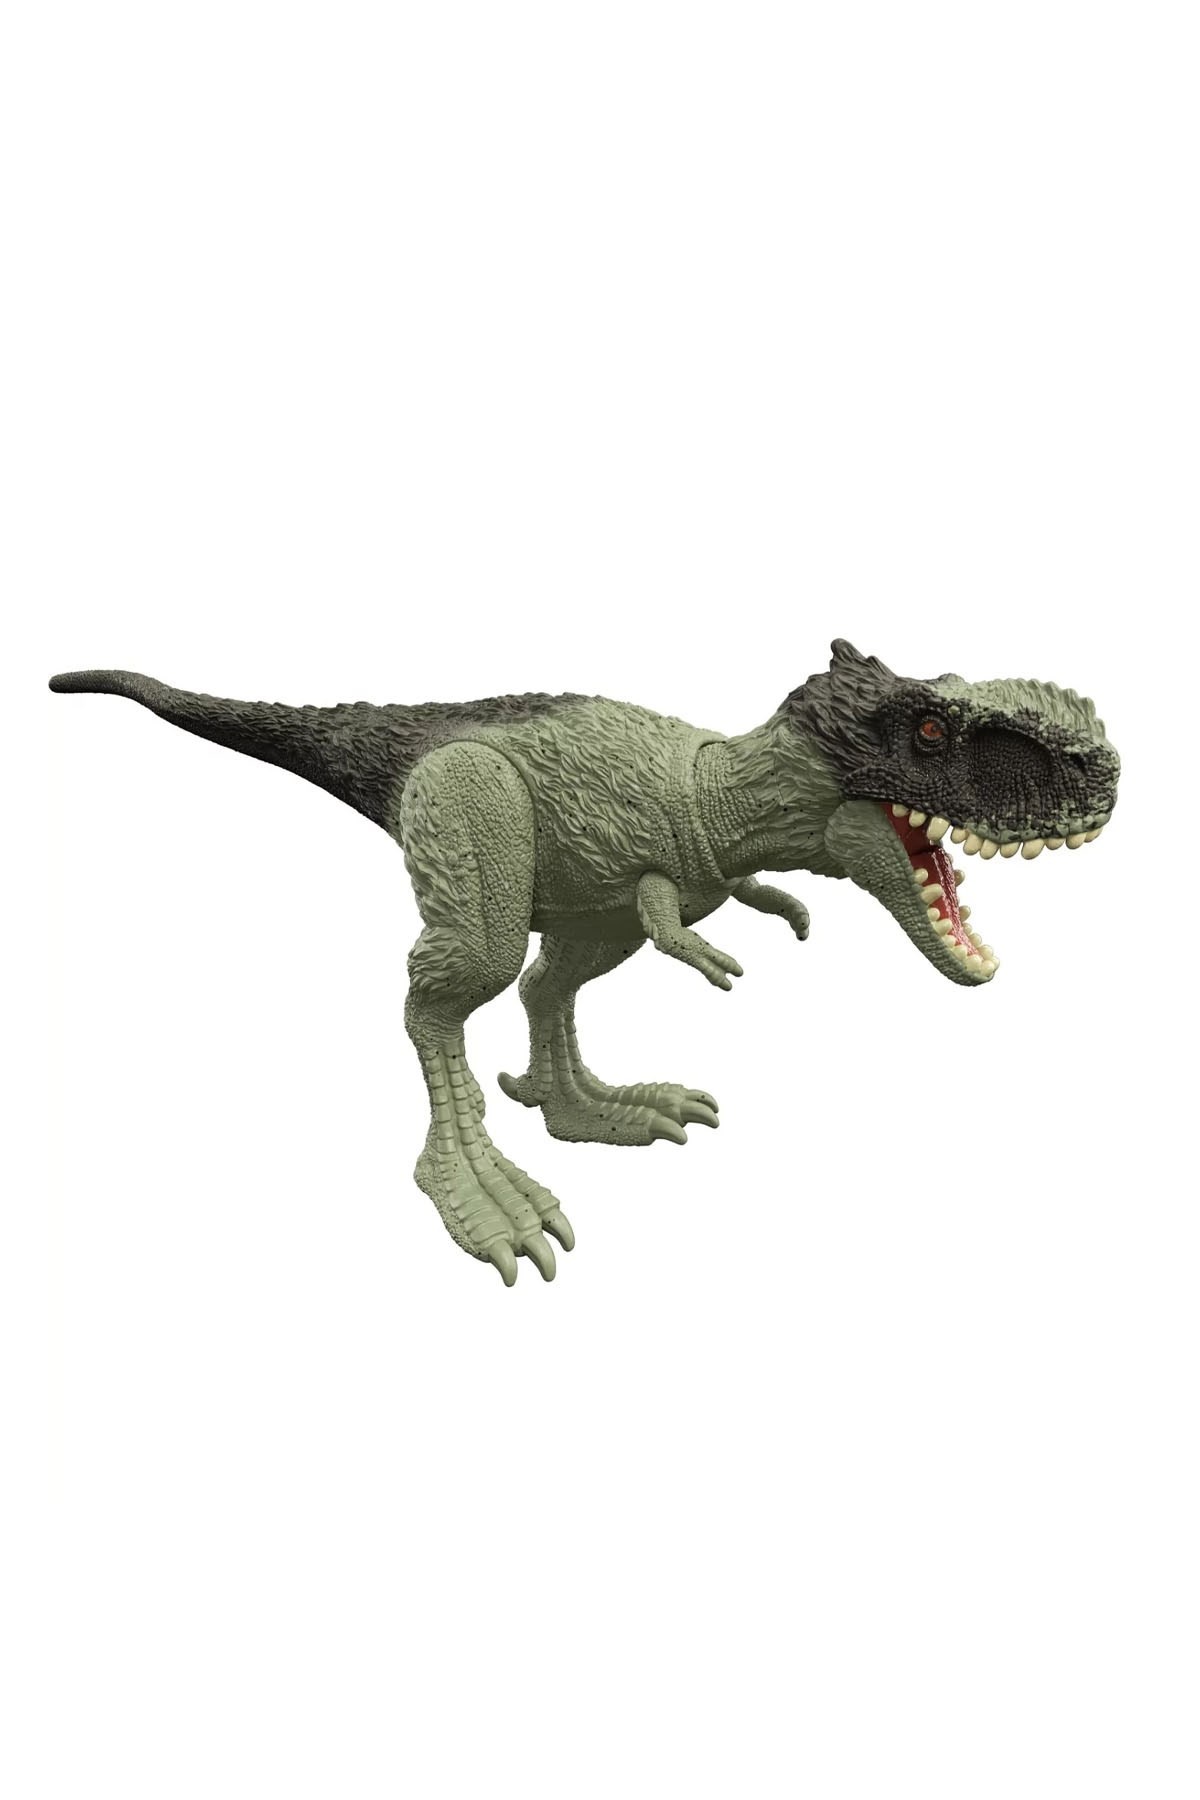 Jurassic World Tehlikeli Dinozor Figürü HDX28